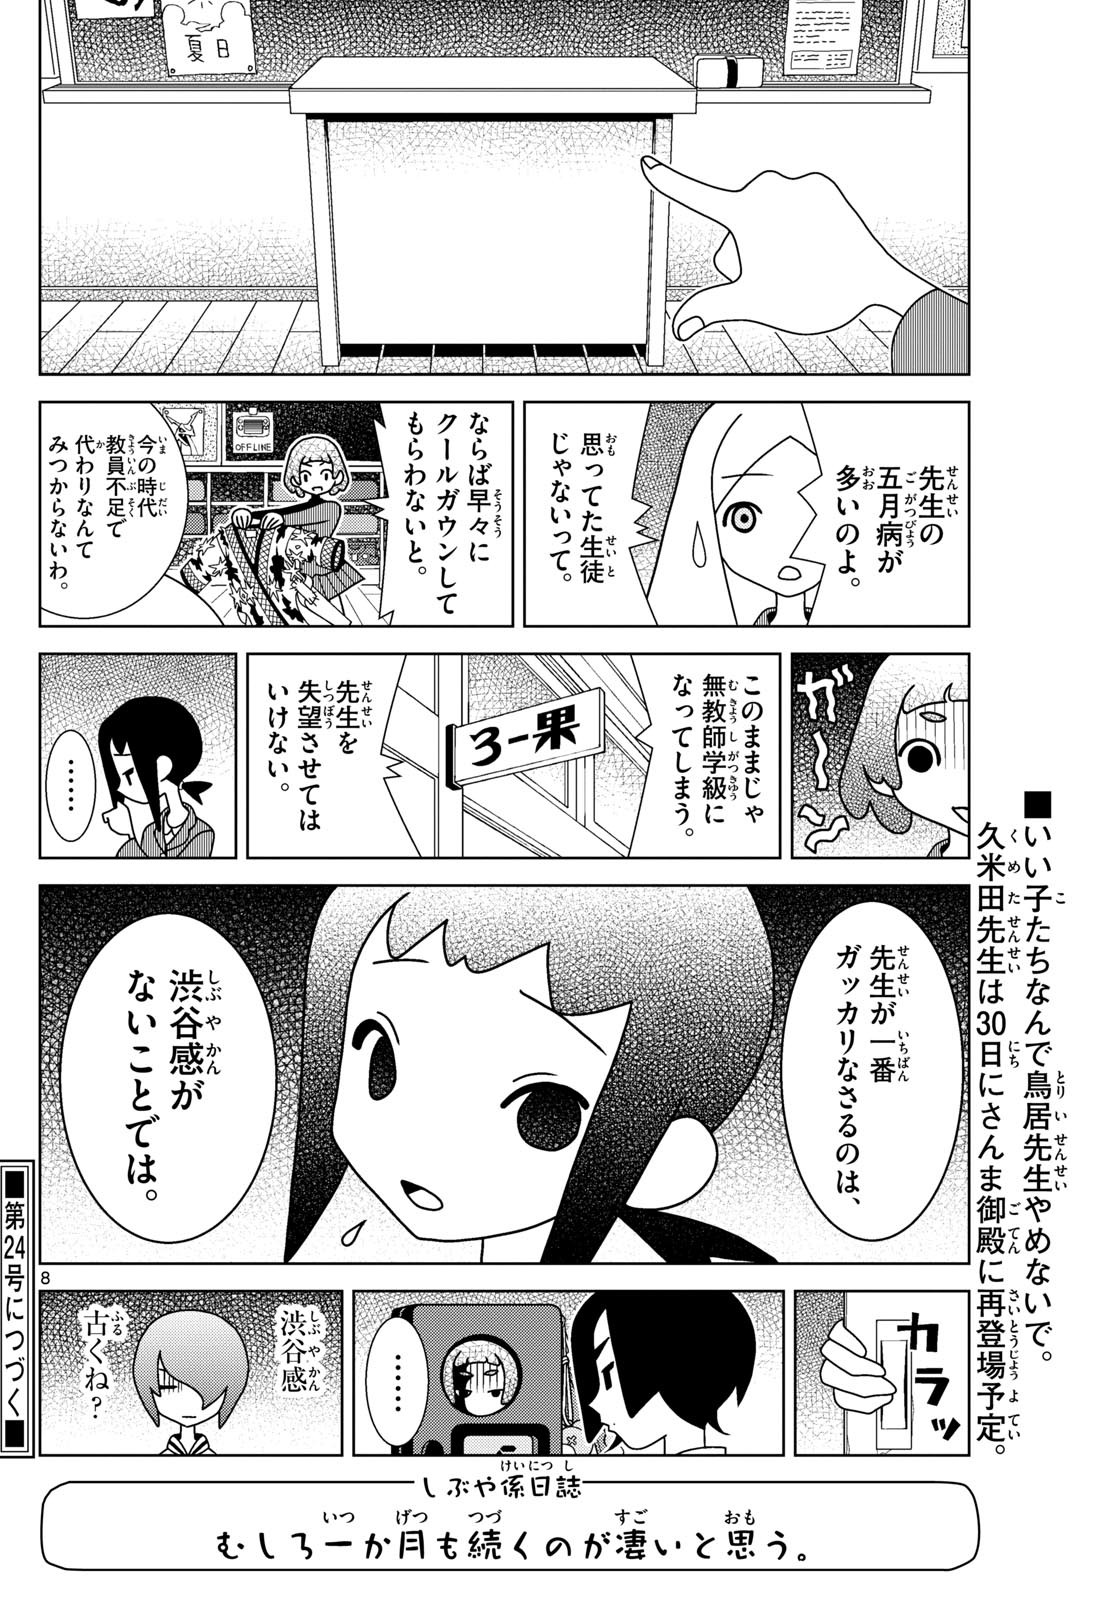 Shibuya Near Family - Chapter 093 - Page 8